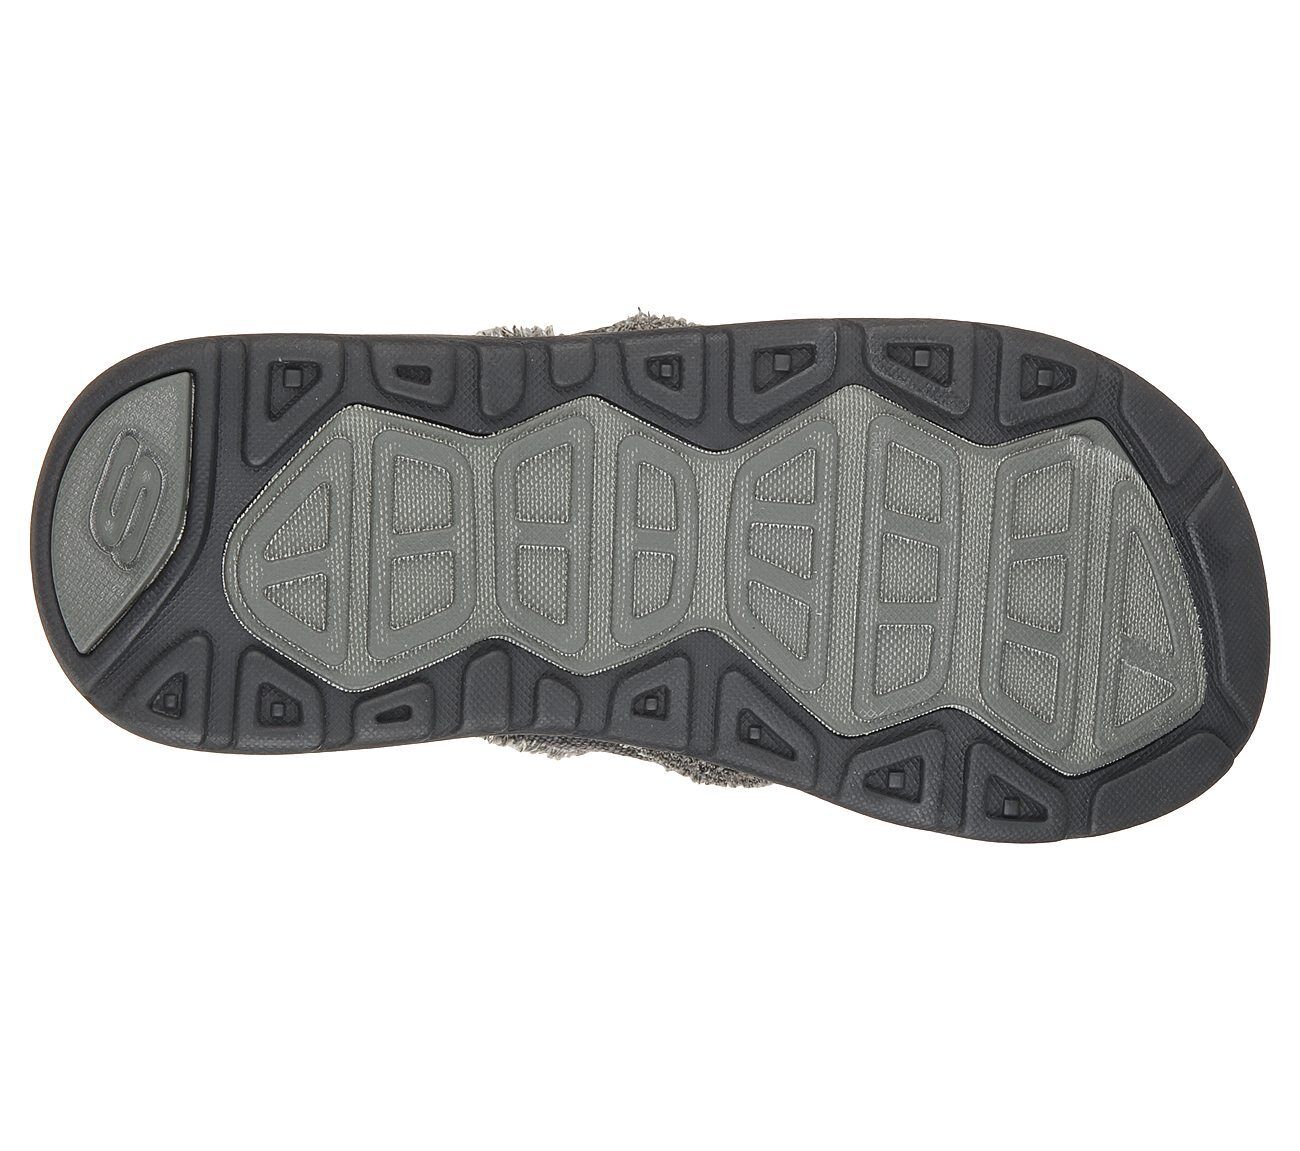 Men's Skechers Relaxed Fit: Supreme - Bosnia Sandals, 64152 /BLK Multiple Sizes Black